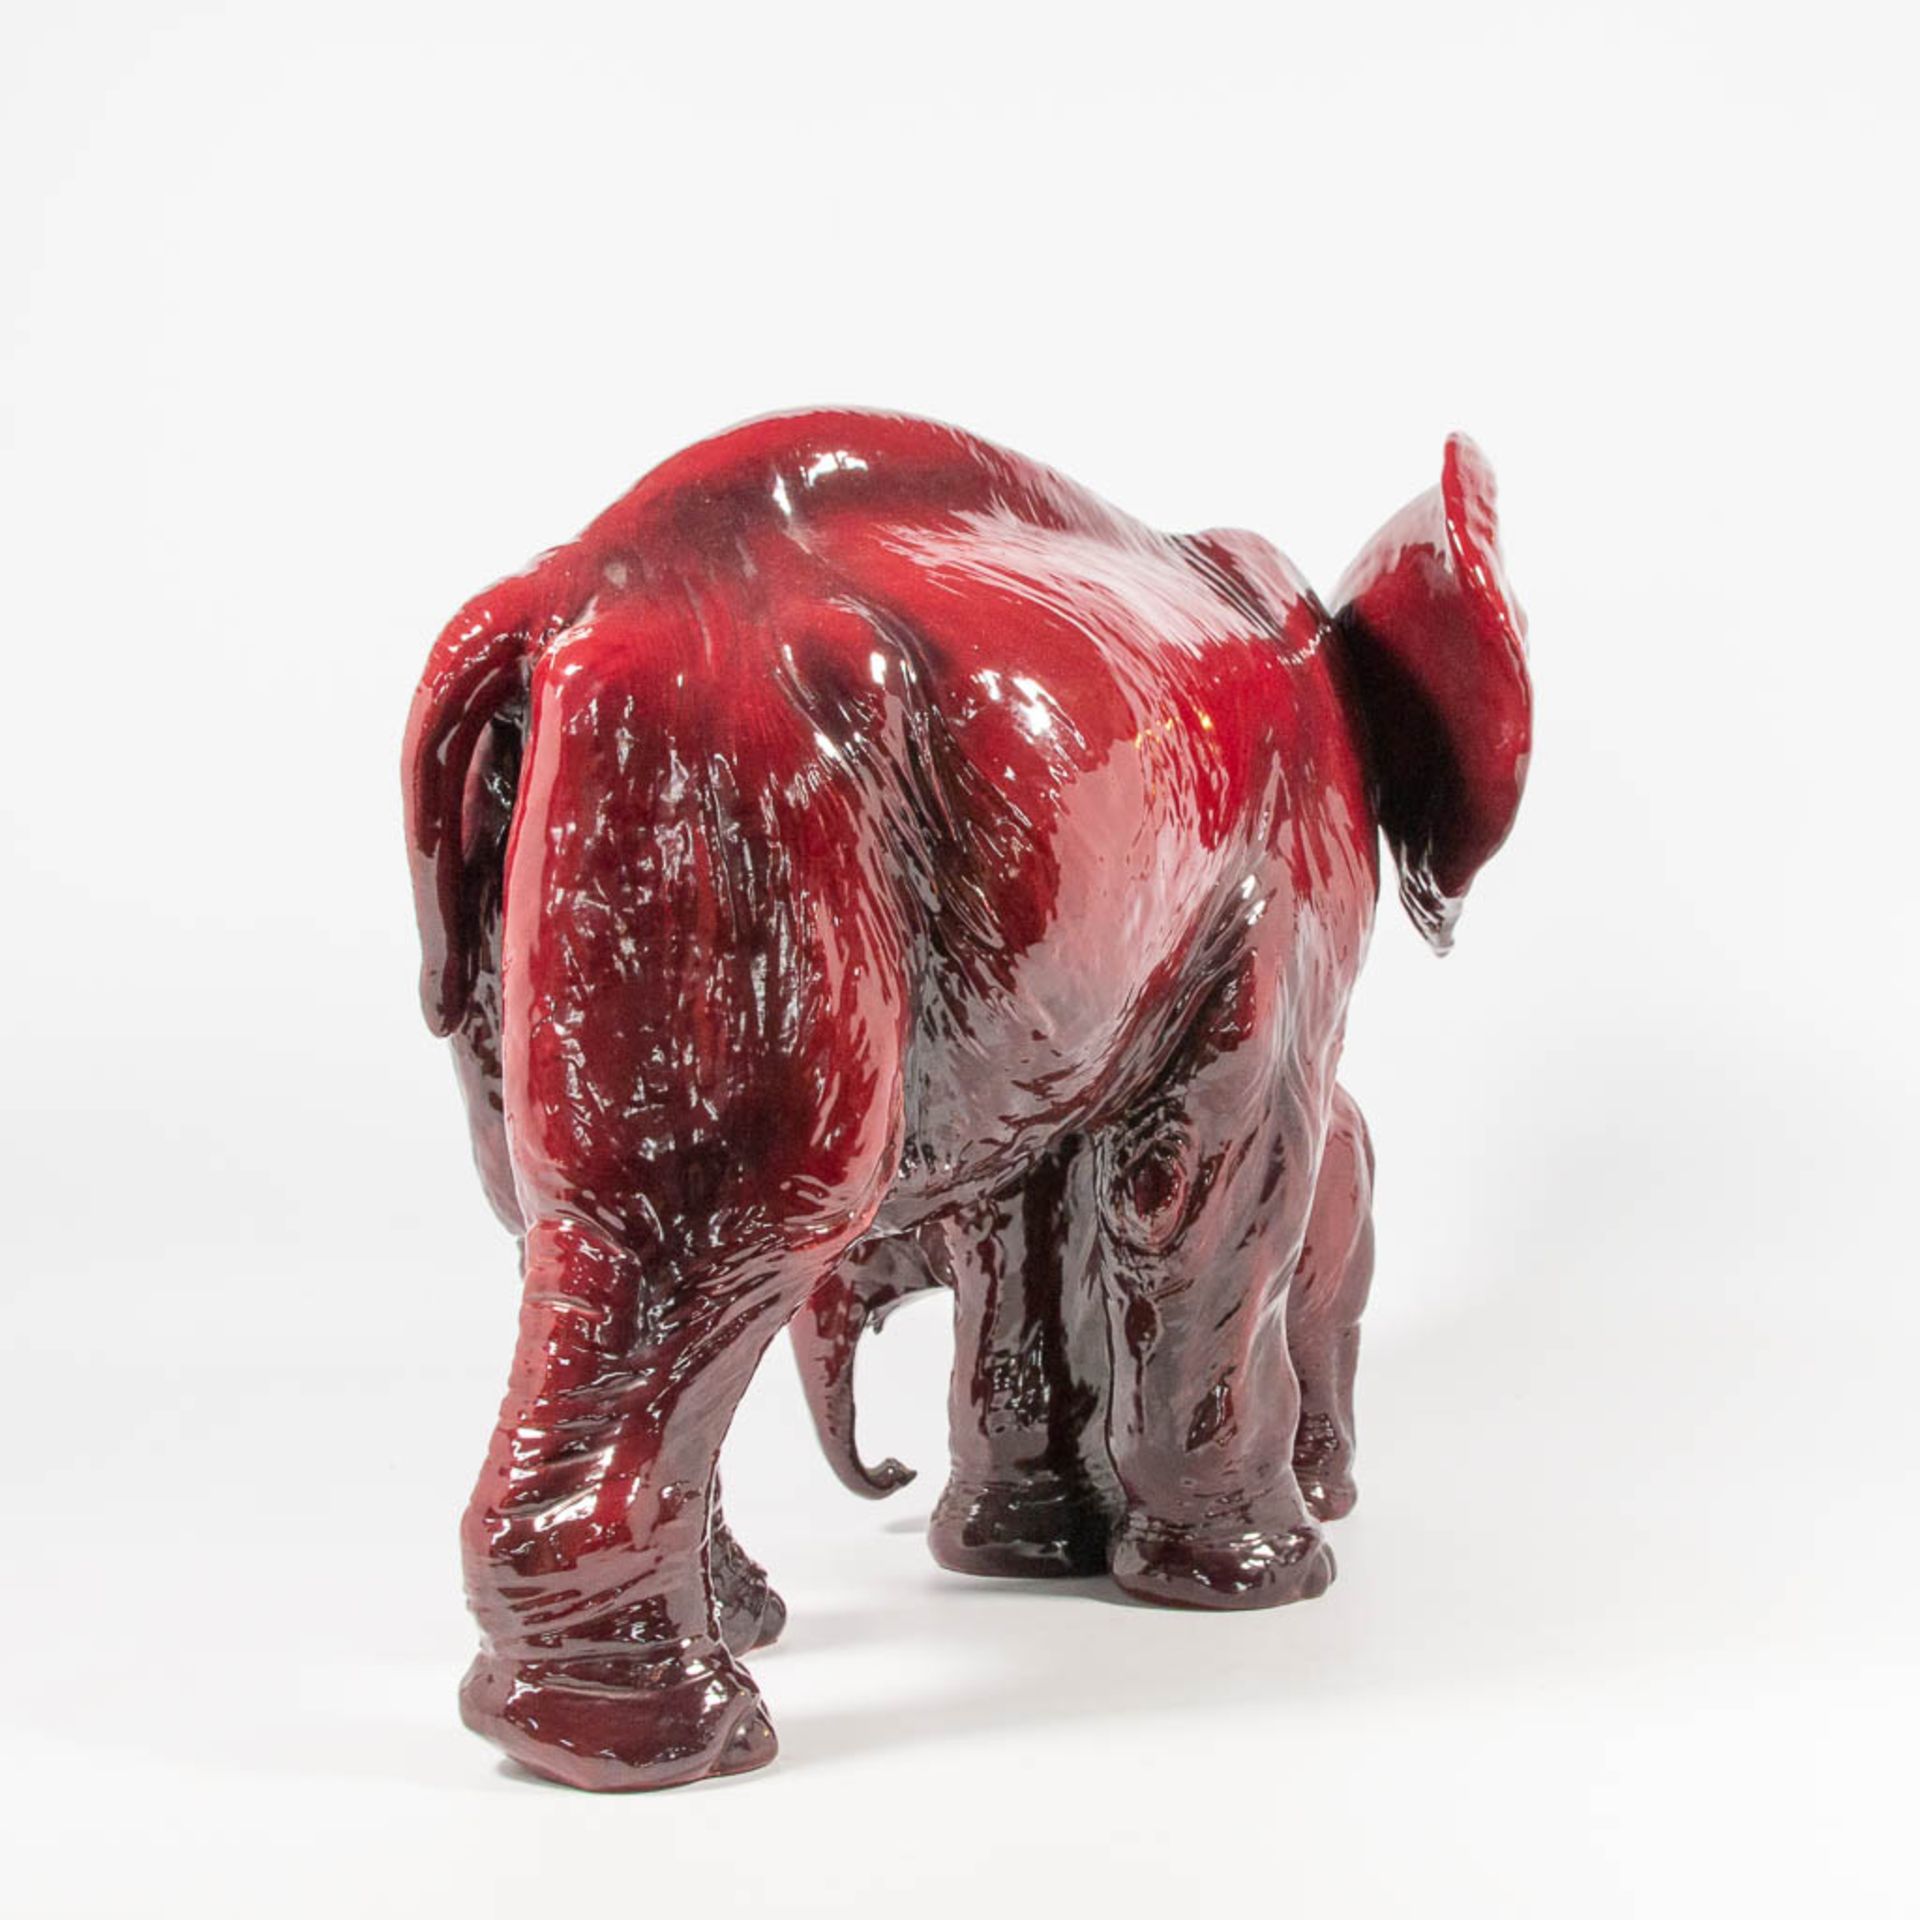 Guido CACCIAPUOTI (1892-1953) An elephant with calf made of red glazed ceramics - Image 5 of 25